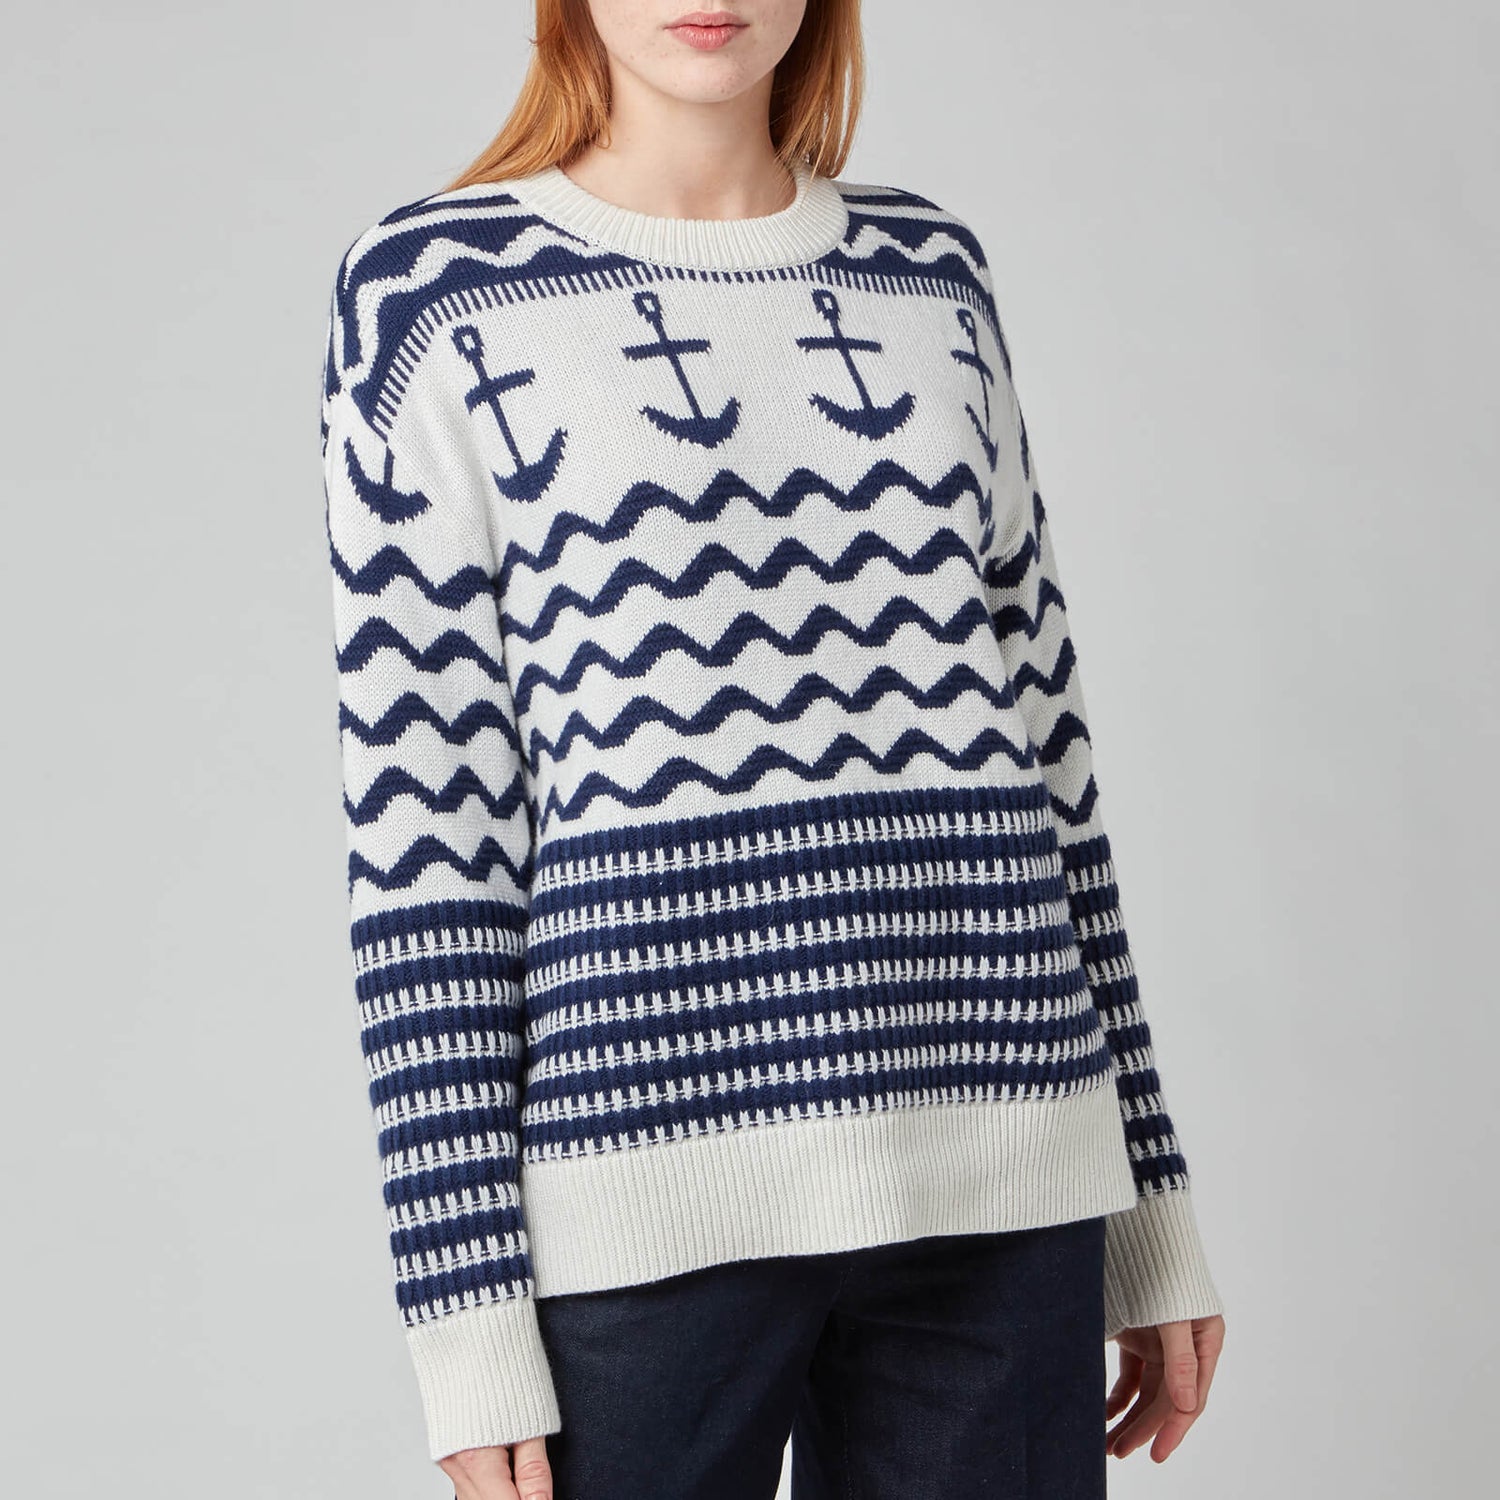 Kate Spade New York Women's Anchor Sweater - French Cream - XS